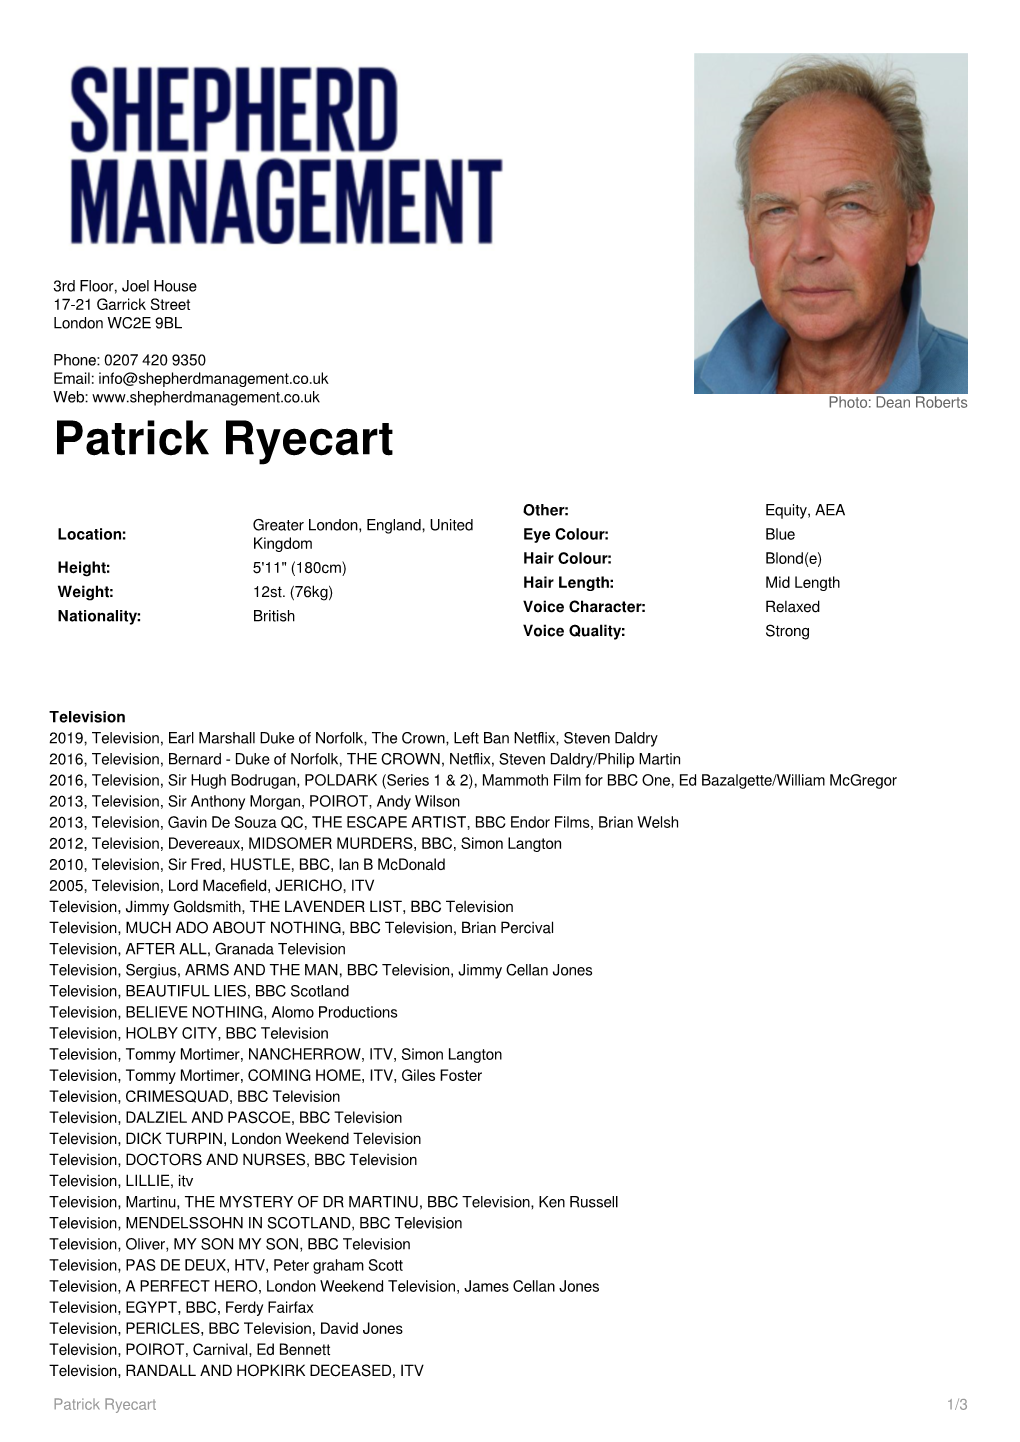 Patrick Ryecart